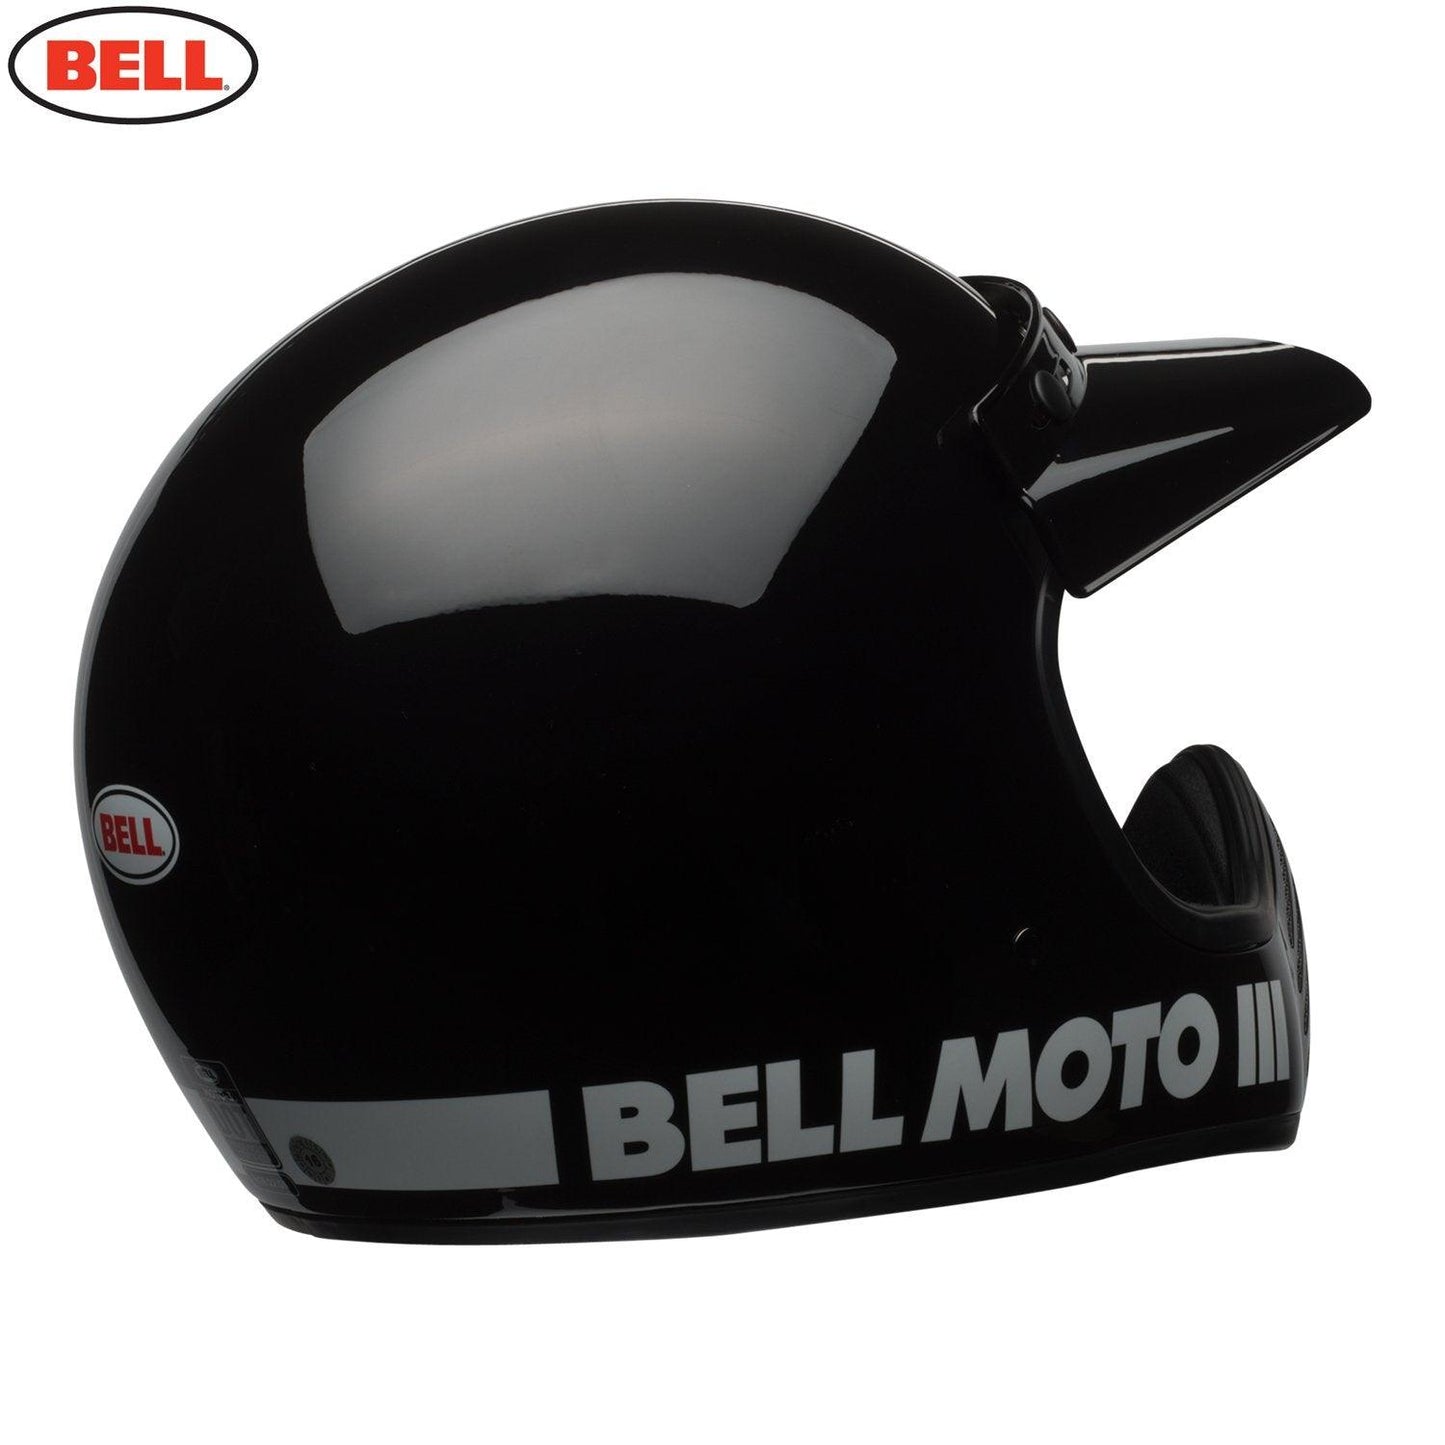 Moto-3 Classic - Newmarket Motorcycle Company 